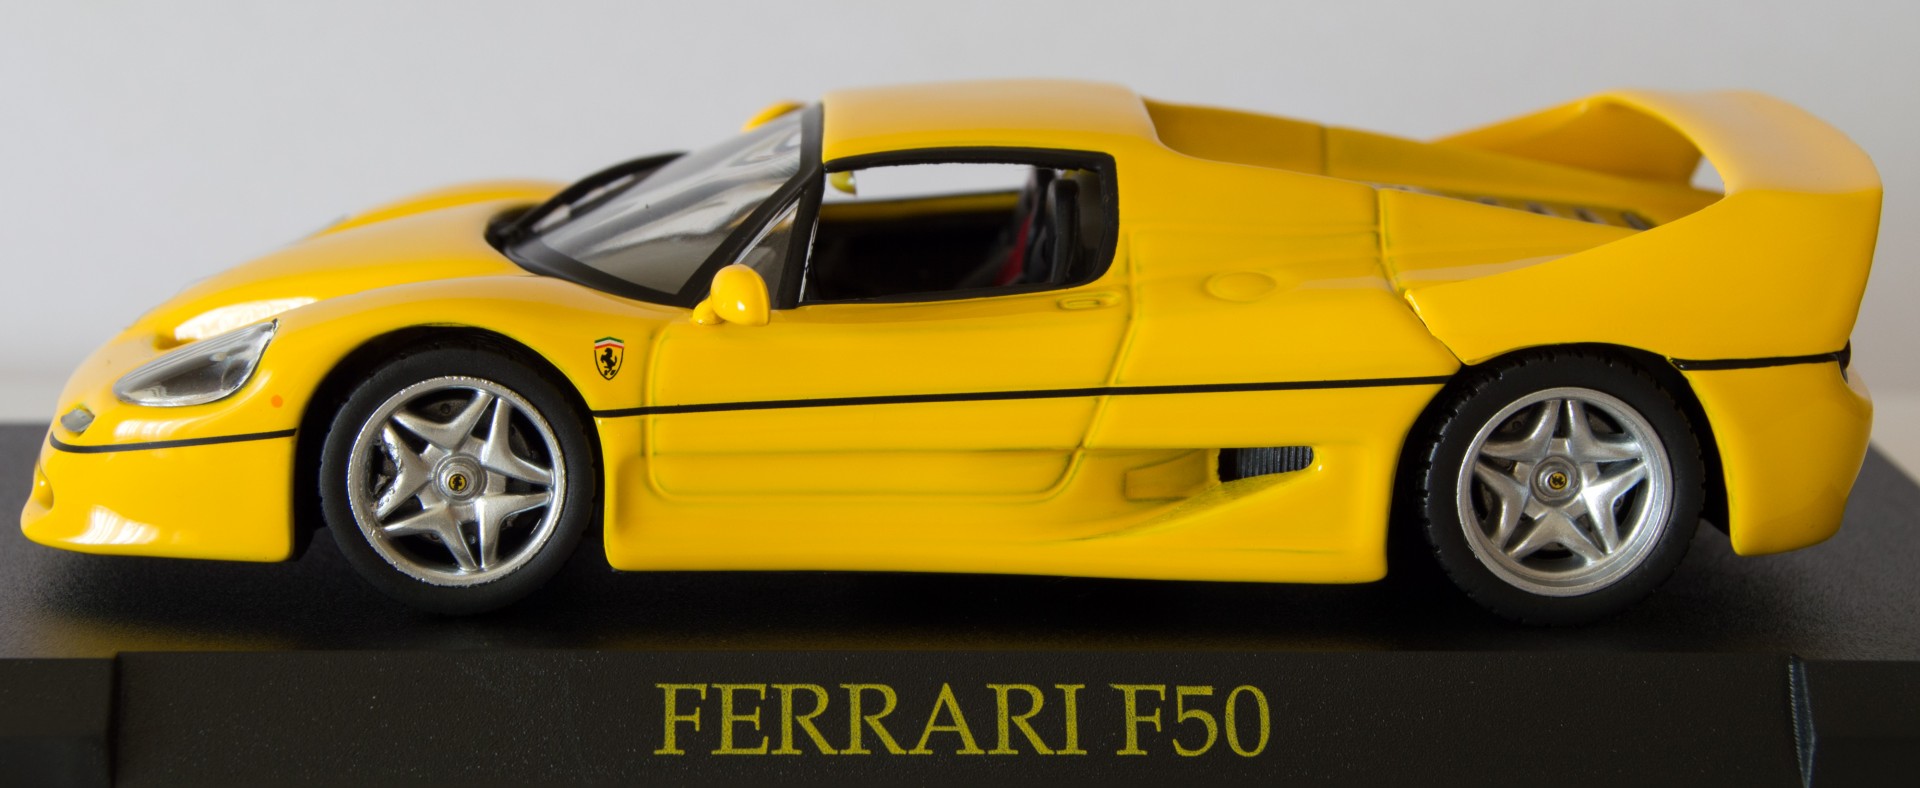 ferrari f50 car free photo